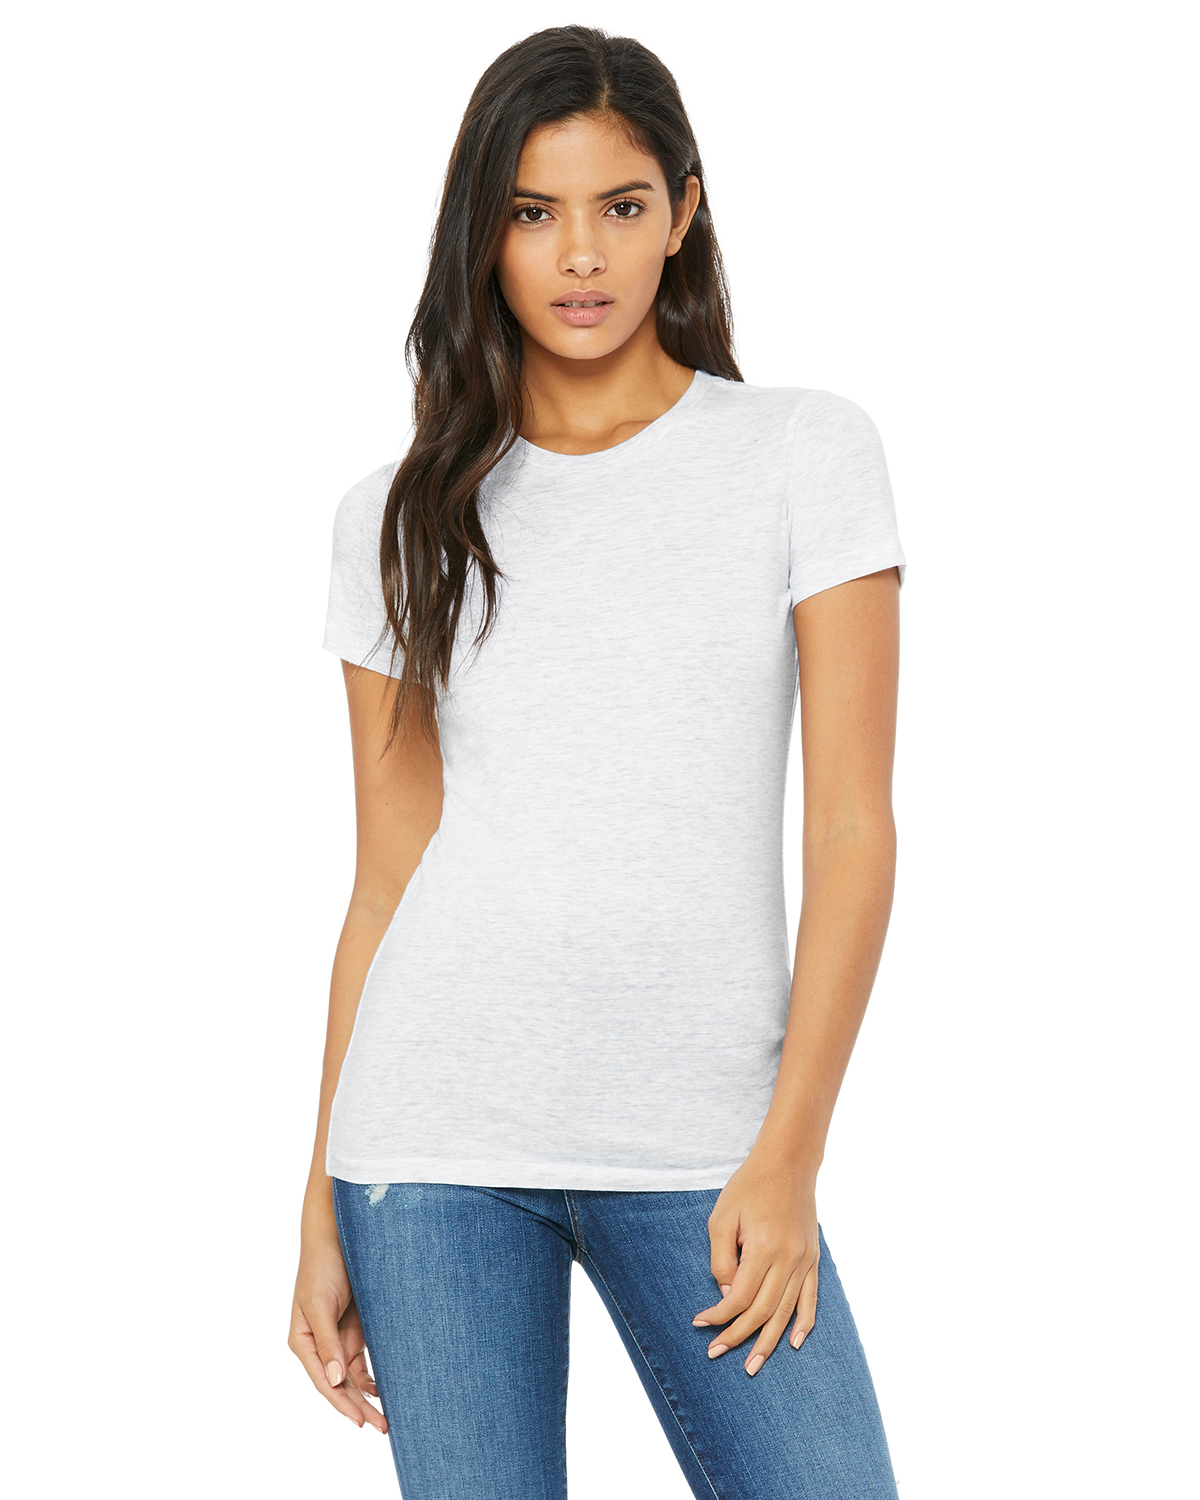 NEW Bella Ladies Favorite Tee Cotton Longer T-Shirt Top Womens Size S ...